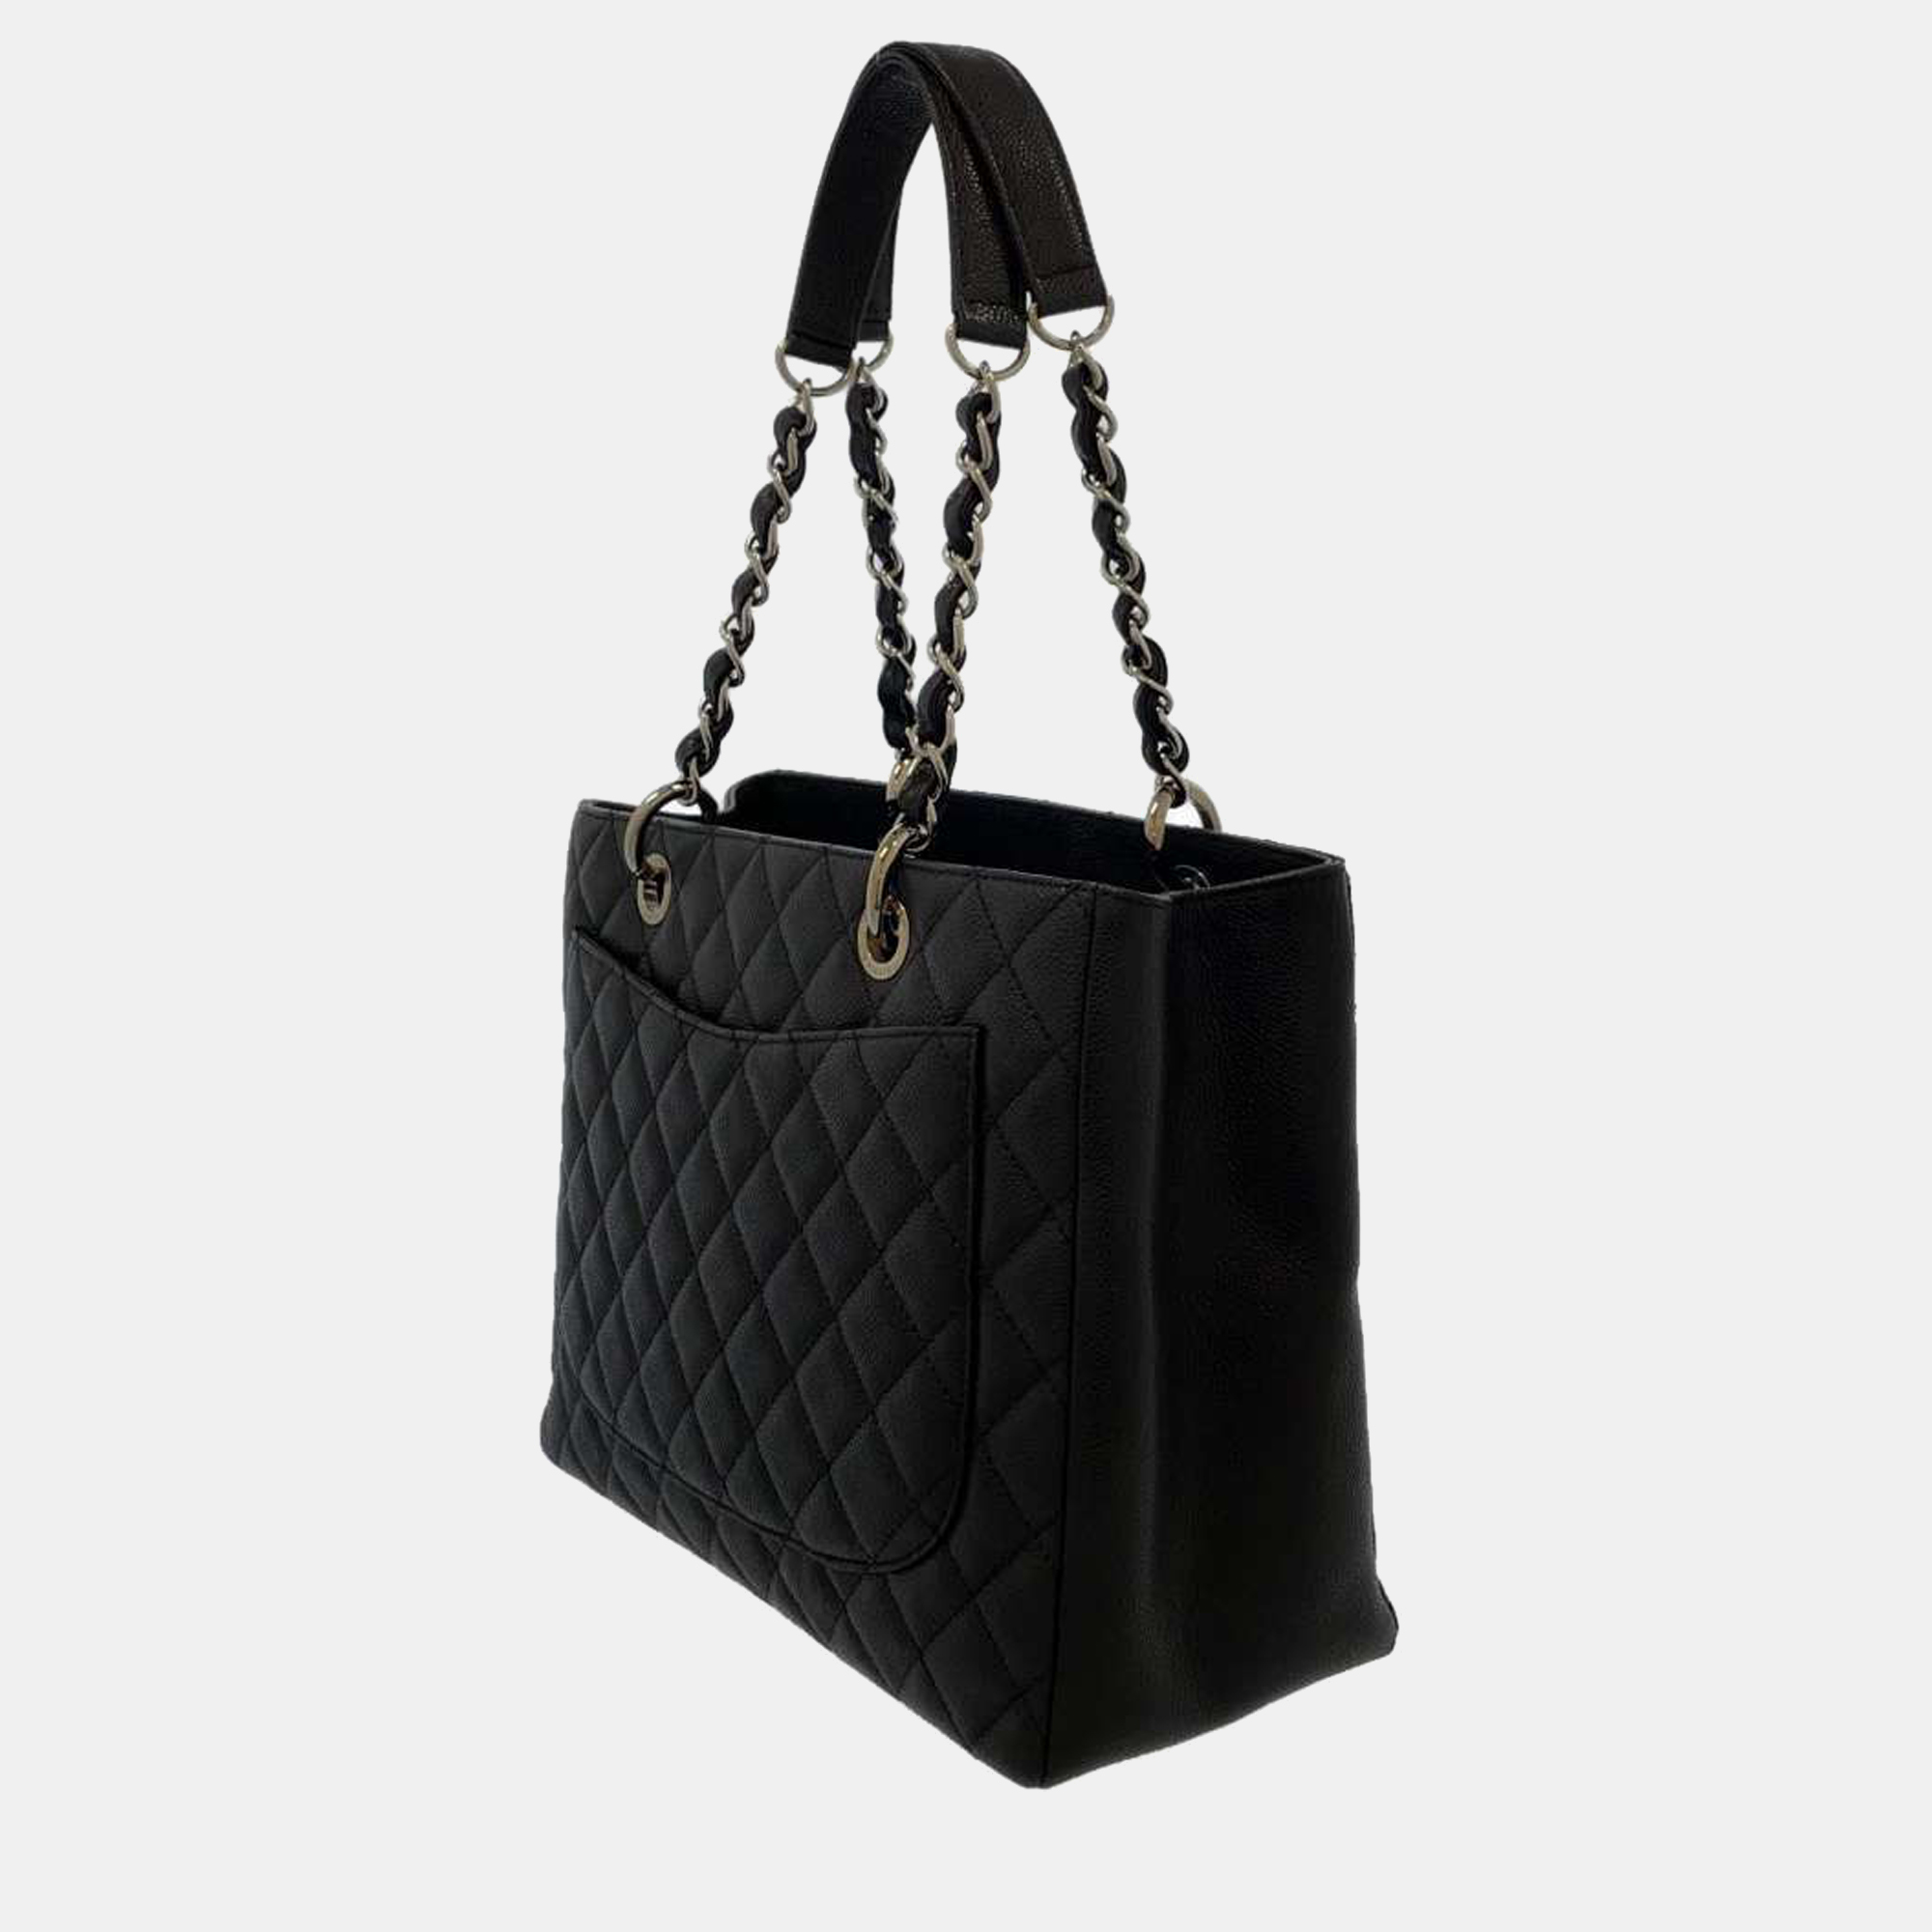 

Chanel Black Caviar Leather GST Tote bag